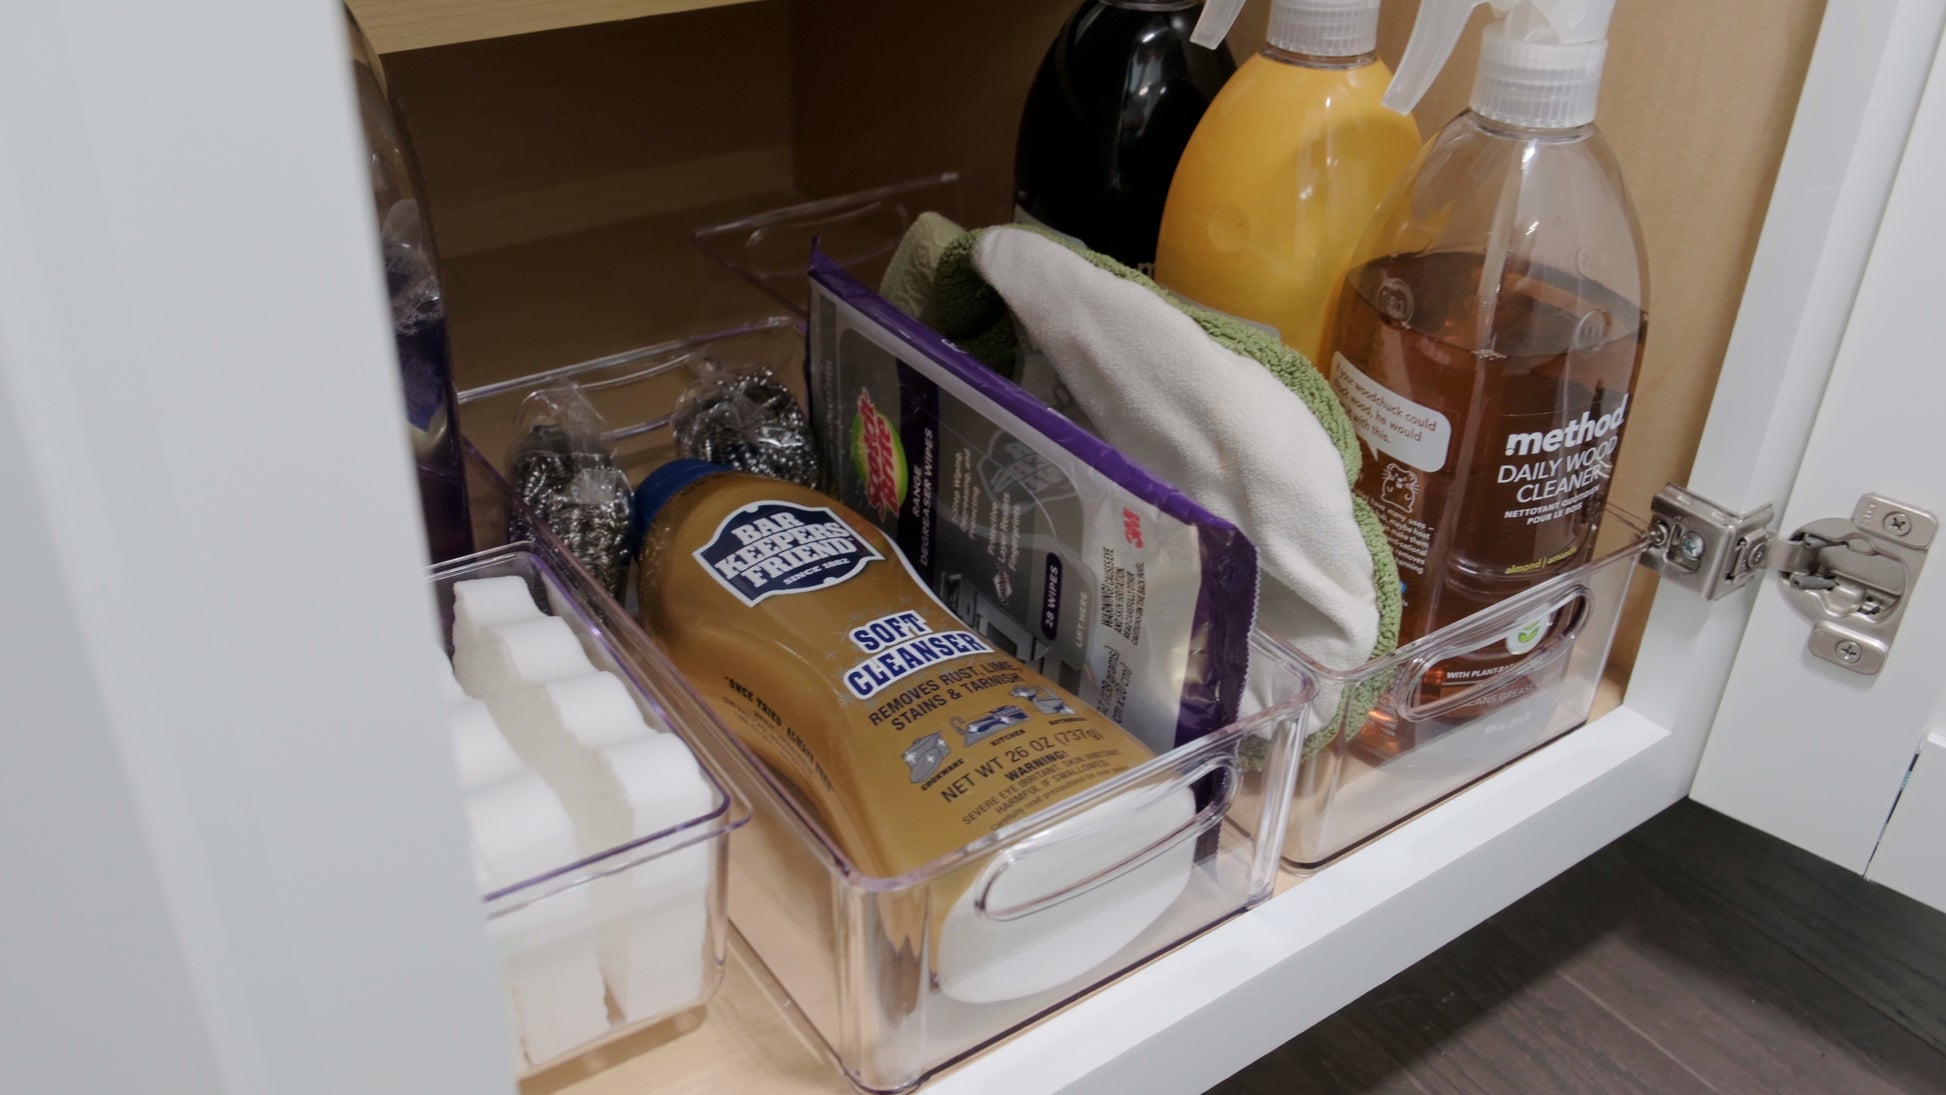  iDesign Plastic Storage Handles for Kitchen, Fridge